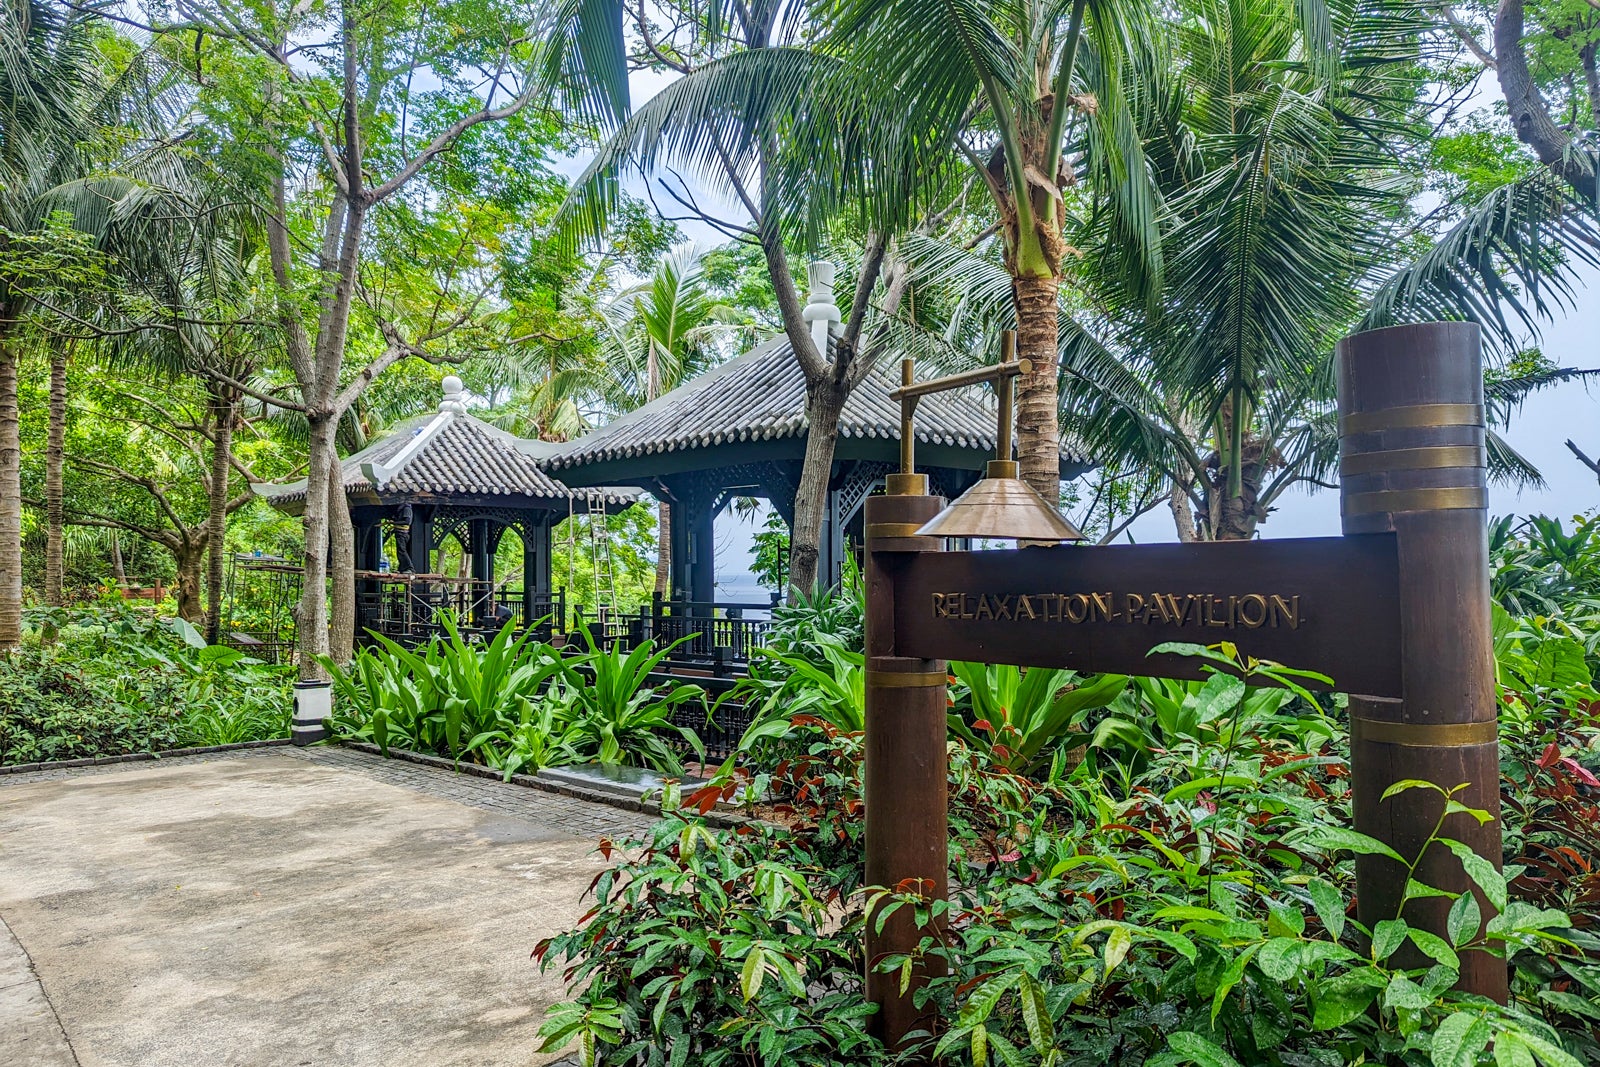 InterContinental Danang relaxation pavilion